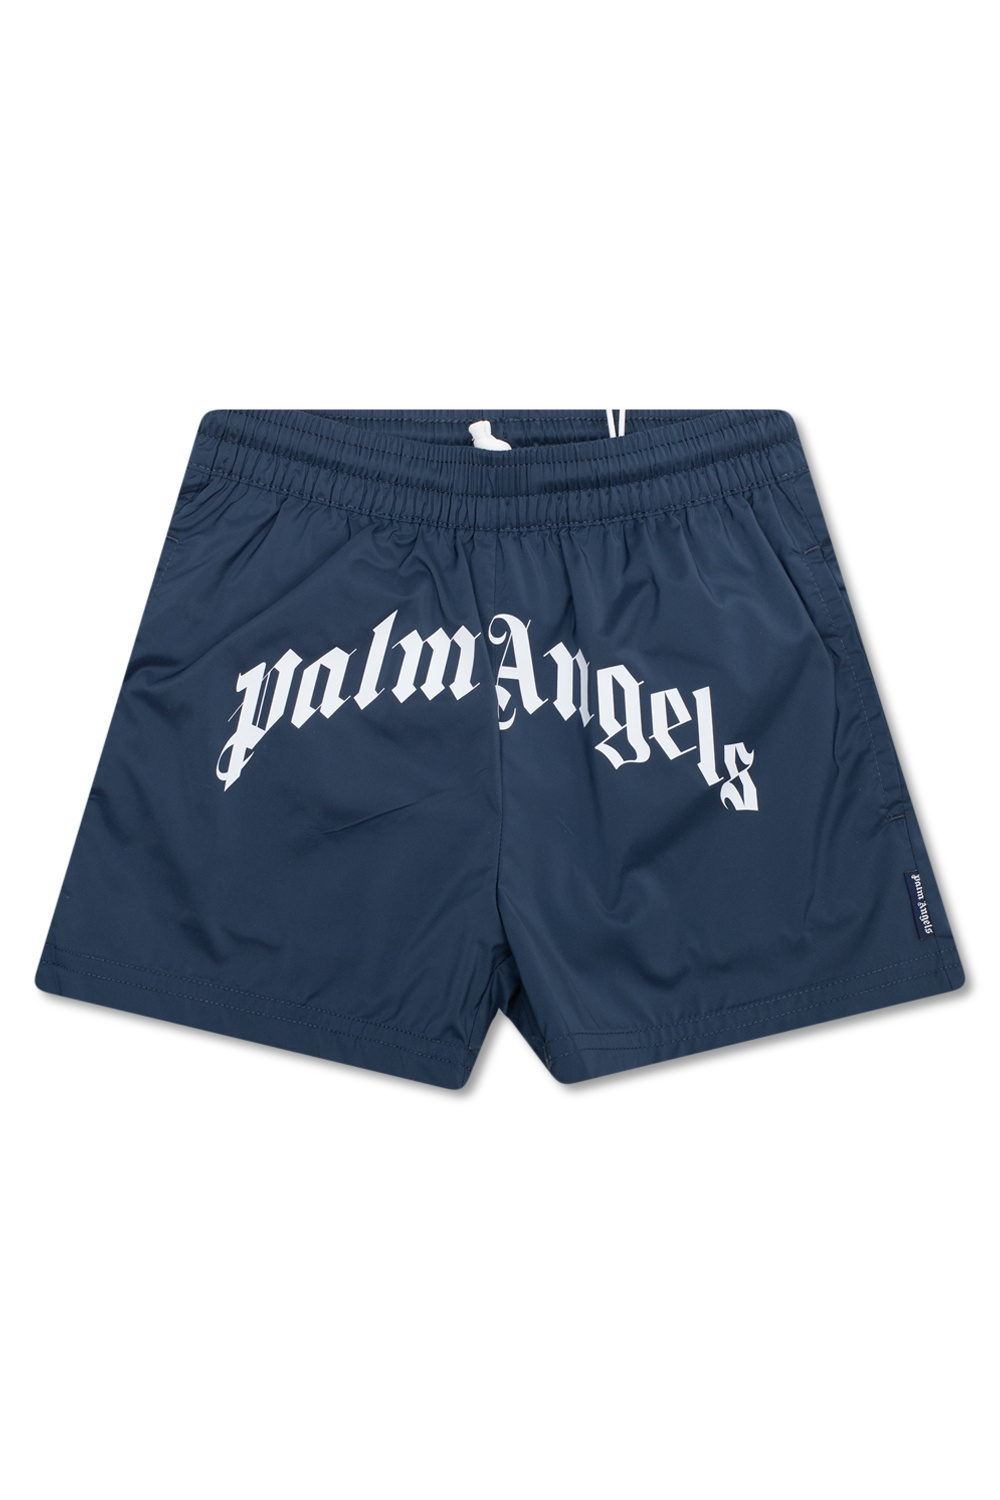 Palm Angels Kids yakuza death core shorts black